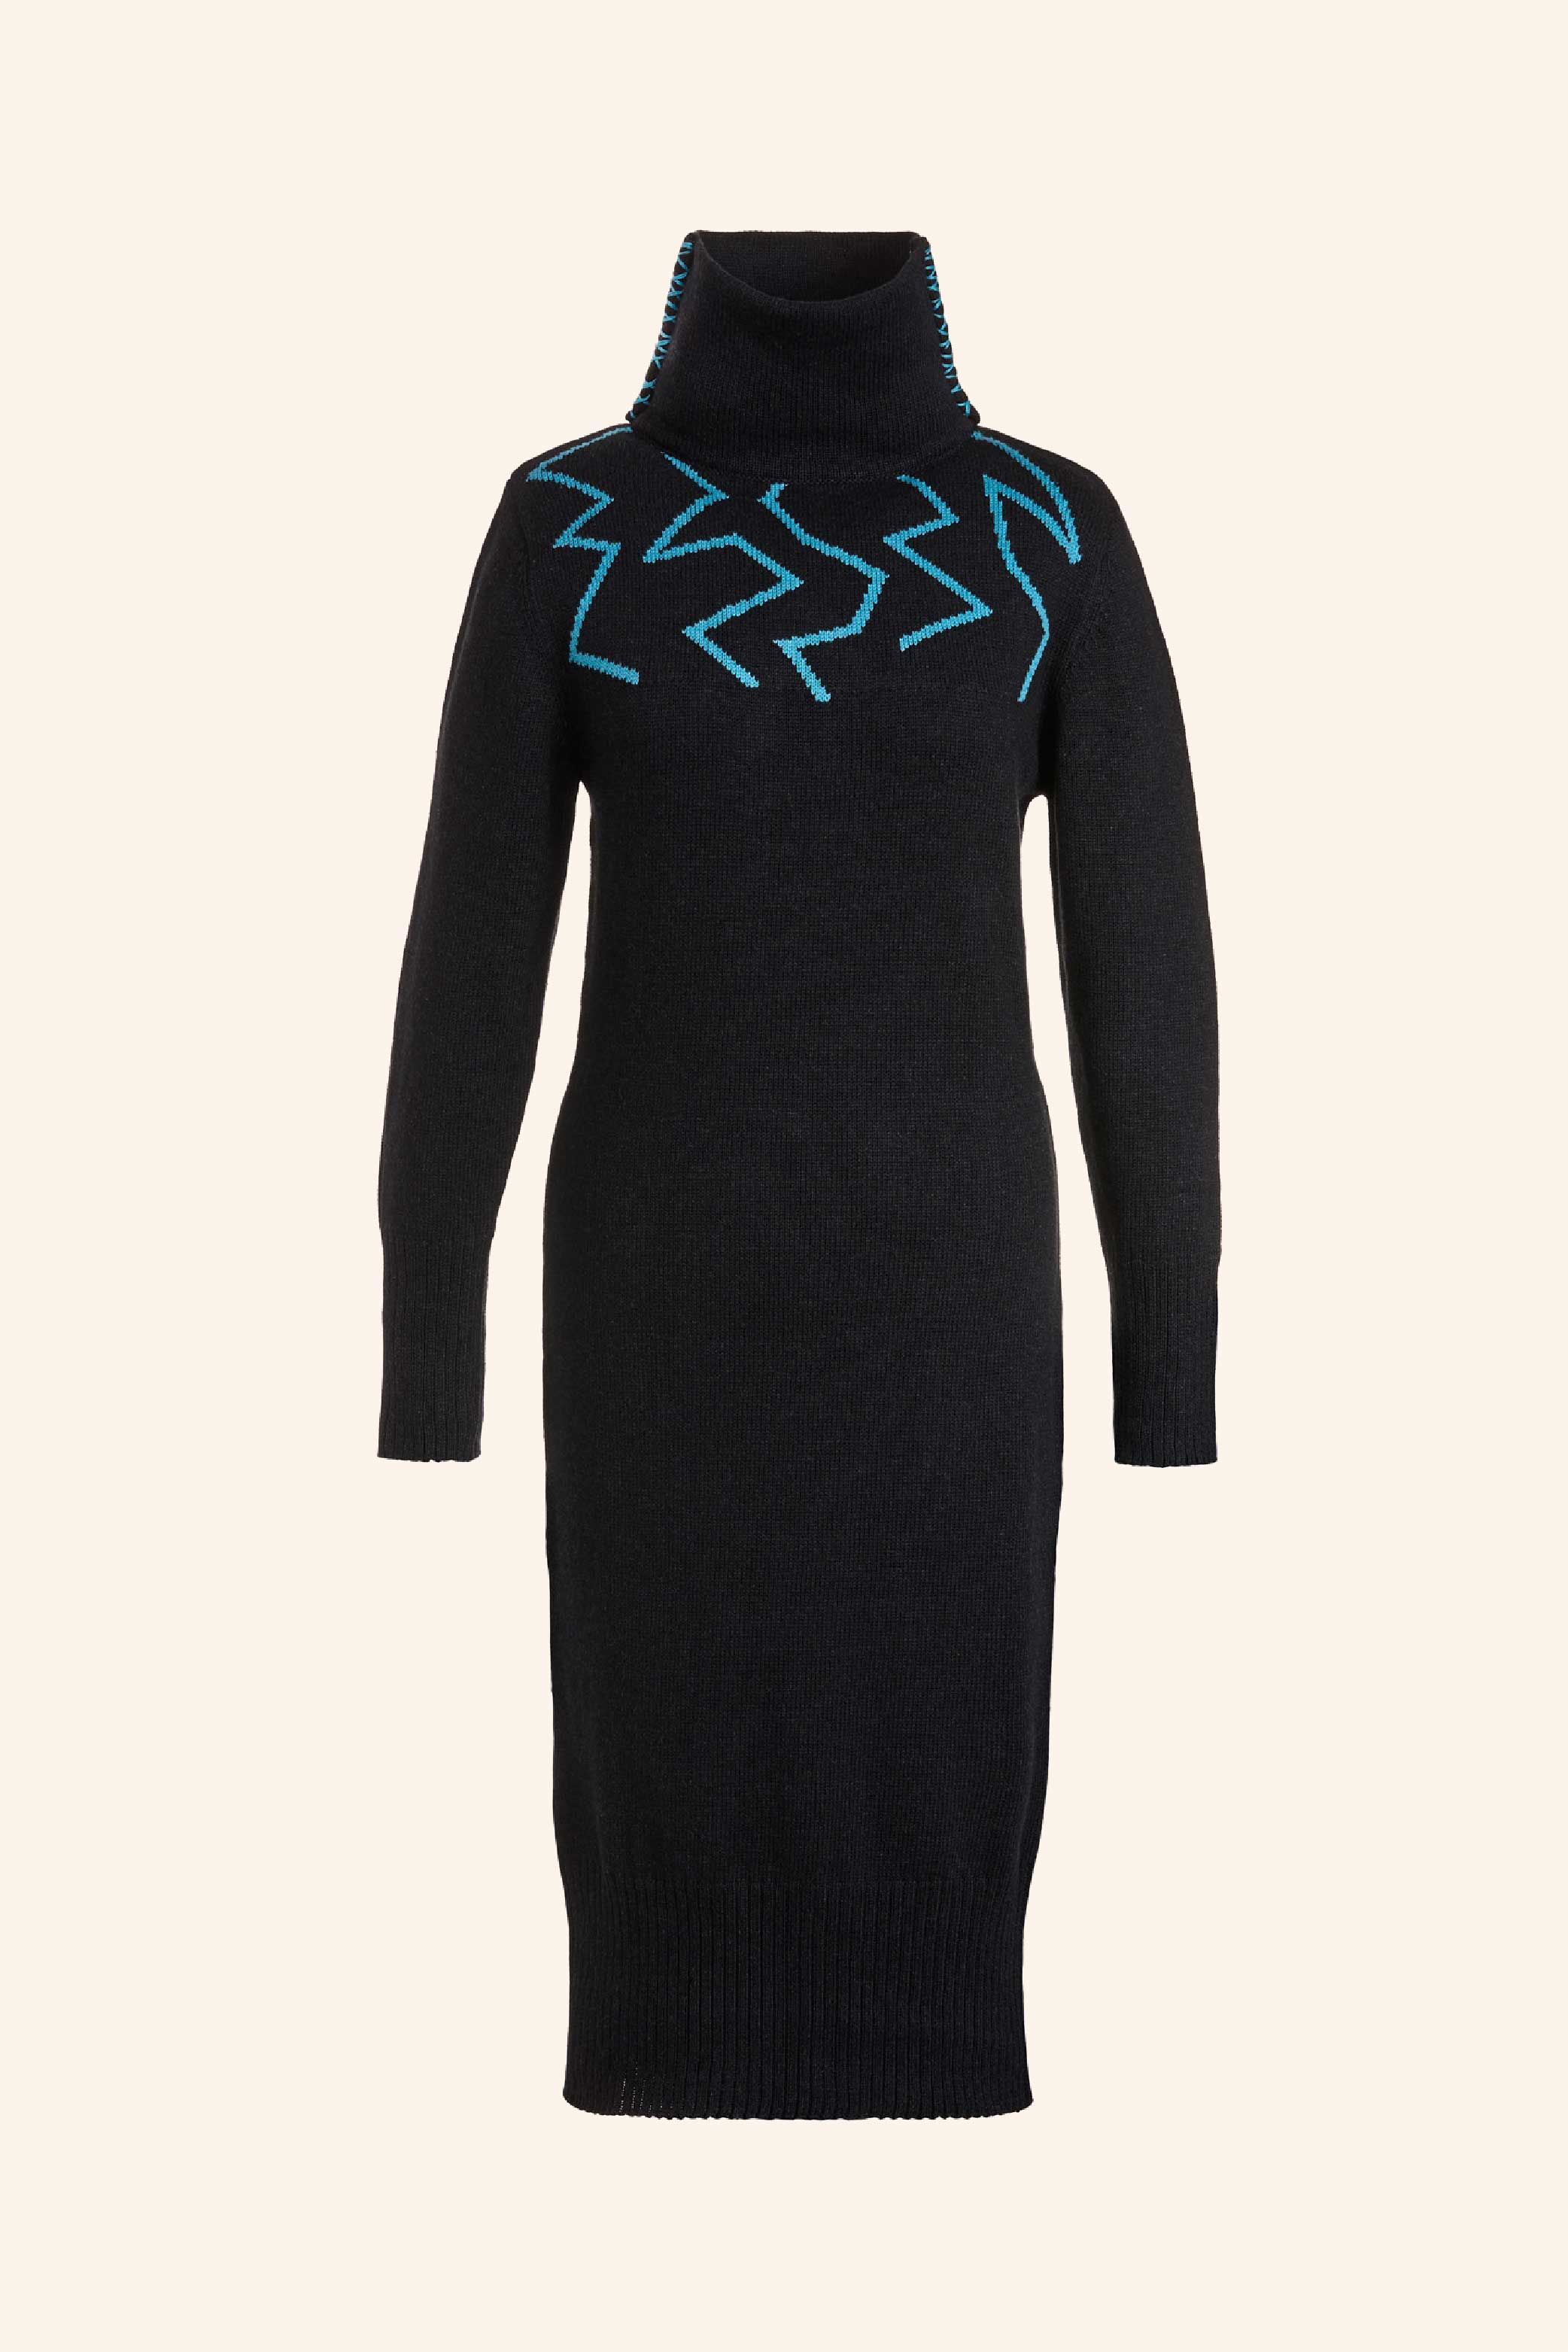 GABRIELLE knitted dress, dark grey/blue